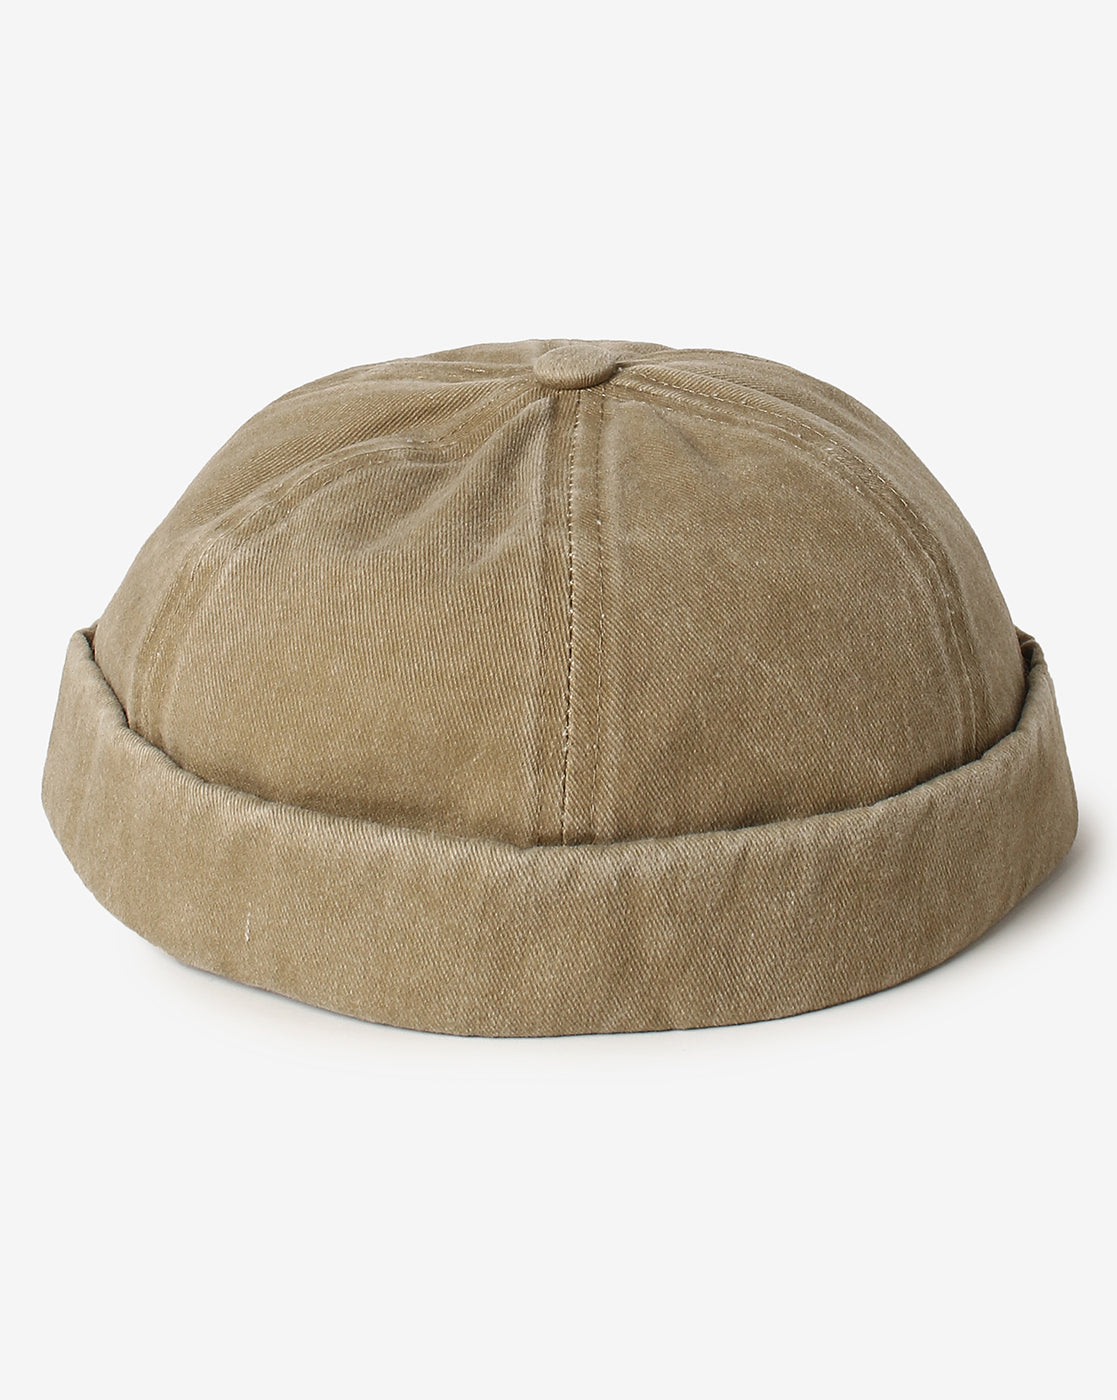 Stylish Textured Hat